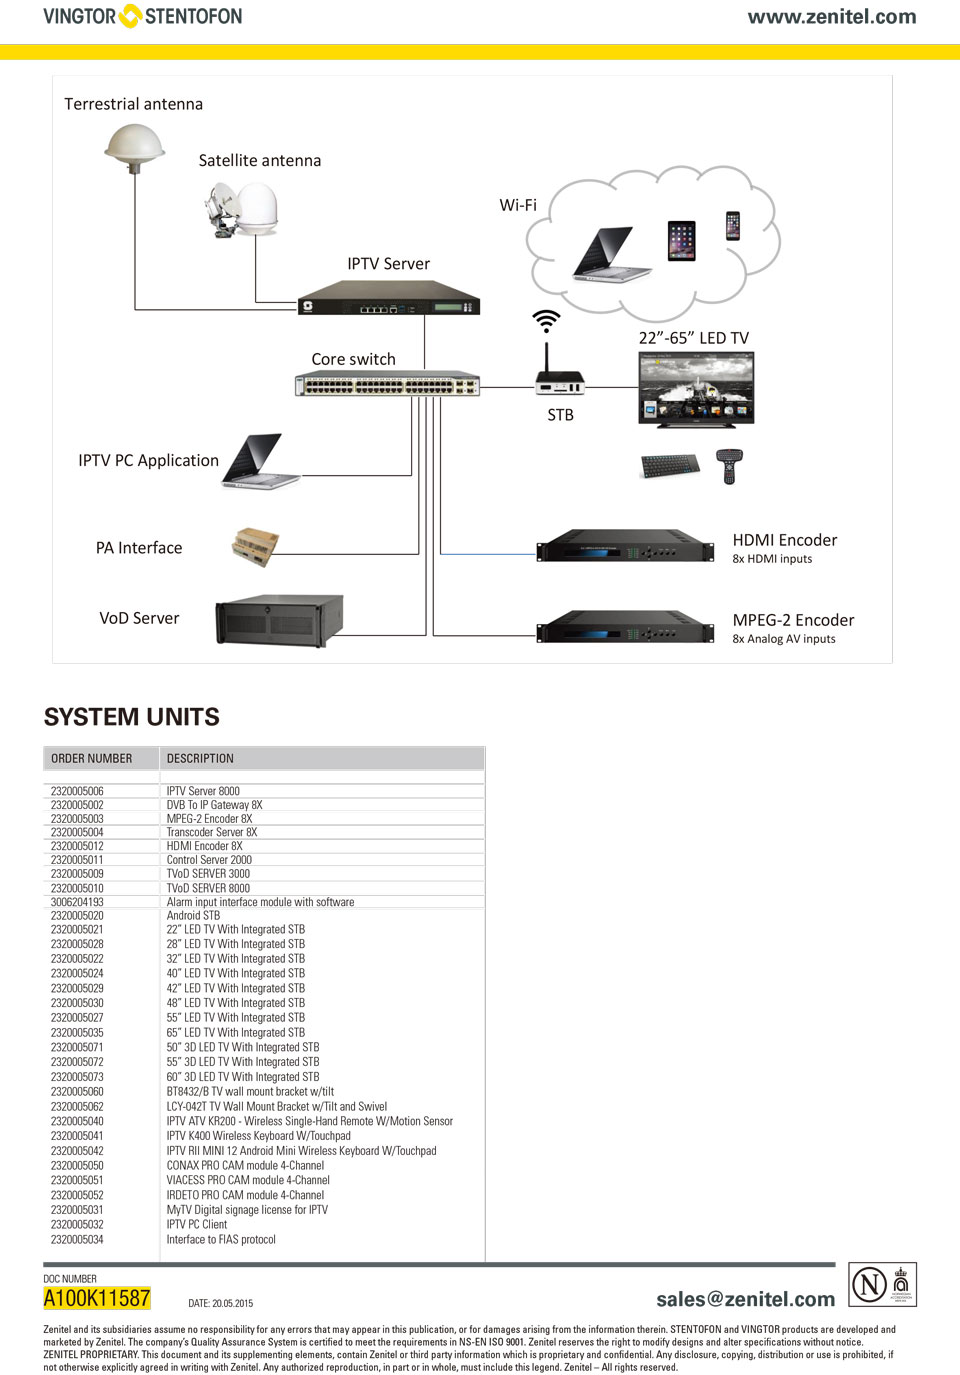 Infotainment & IPTV System